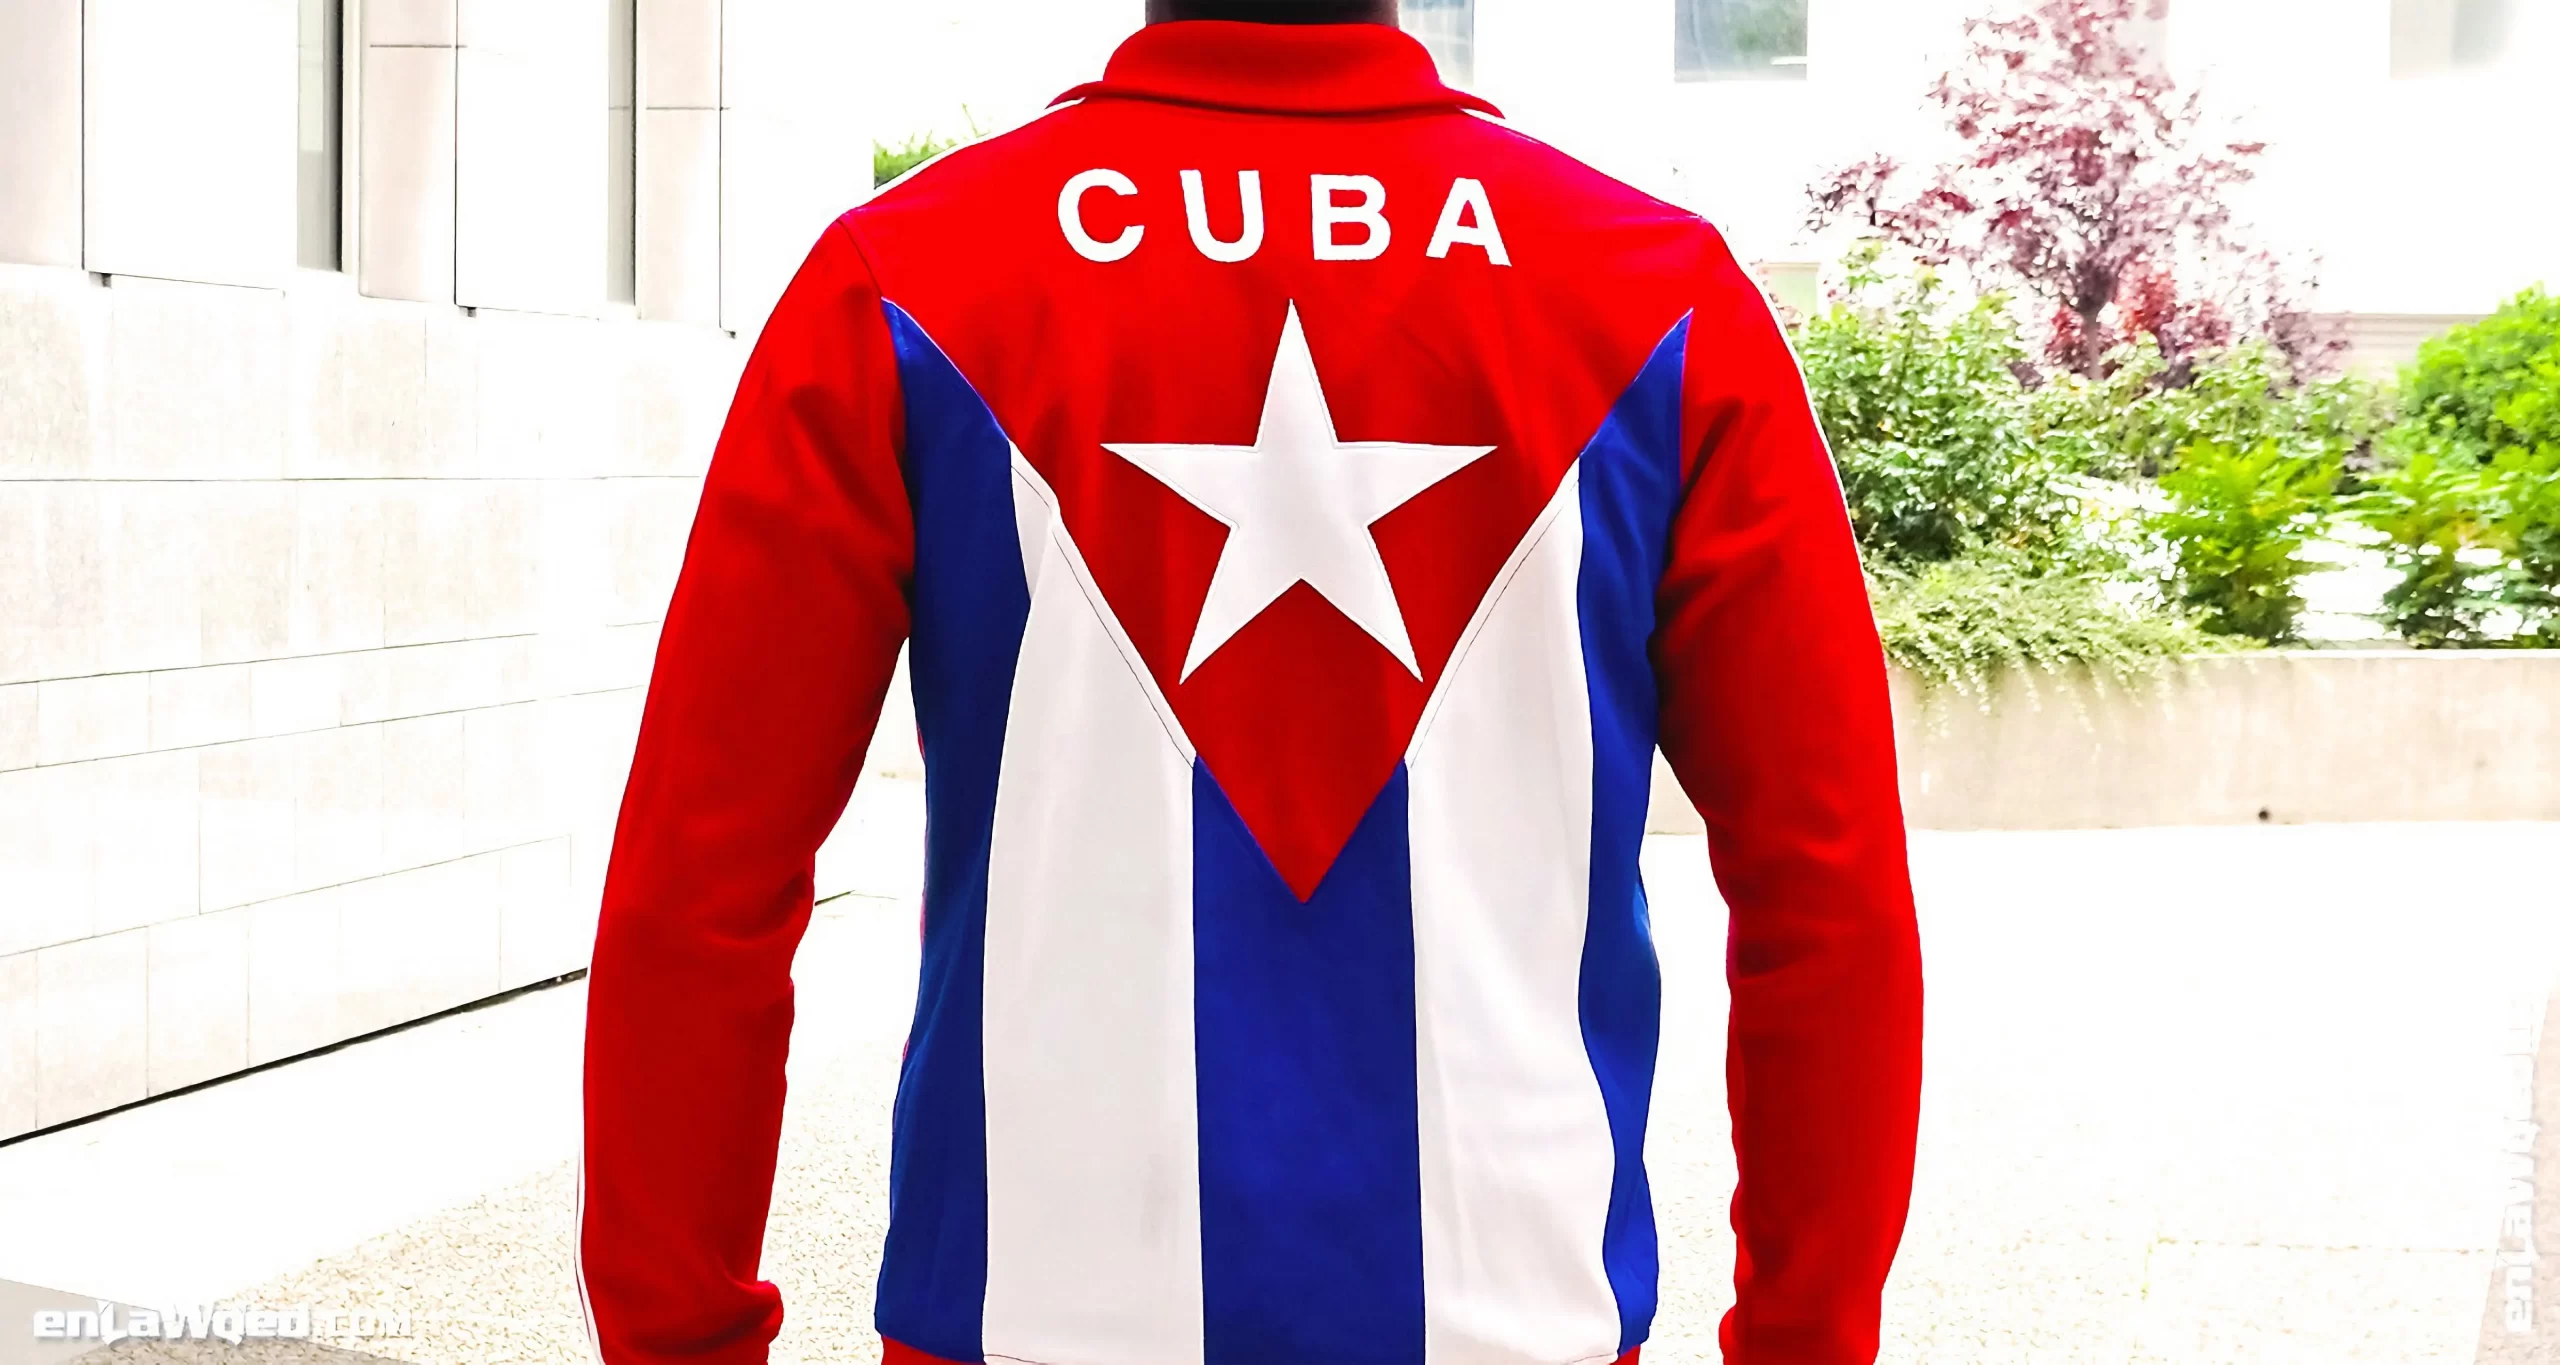 Men’s 2007 Cuba Track Top by Adidas Originals: Sublime (EnLawded.com file #lmchk89942ip2y121671kg9st)